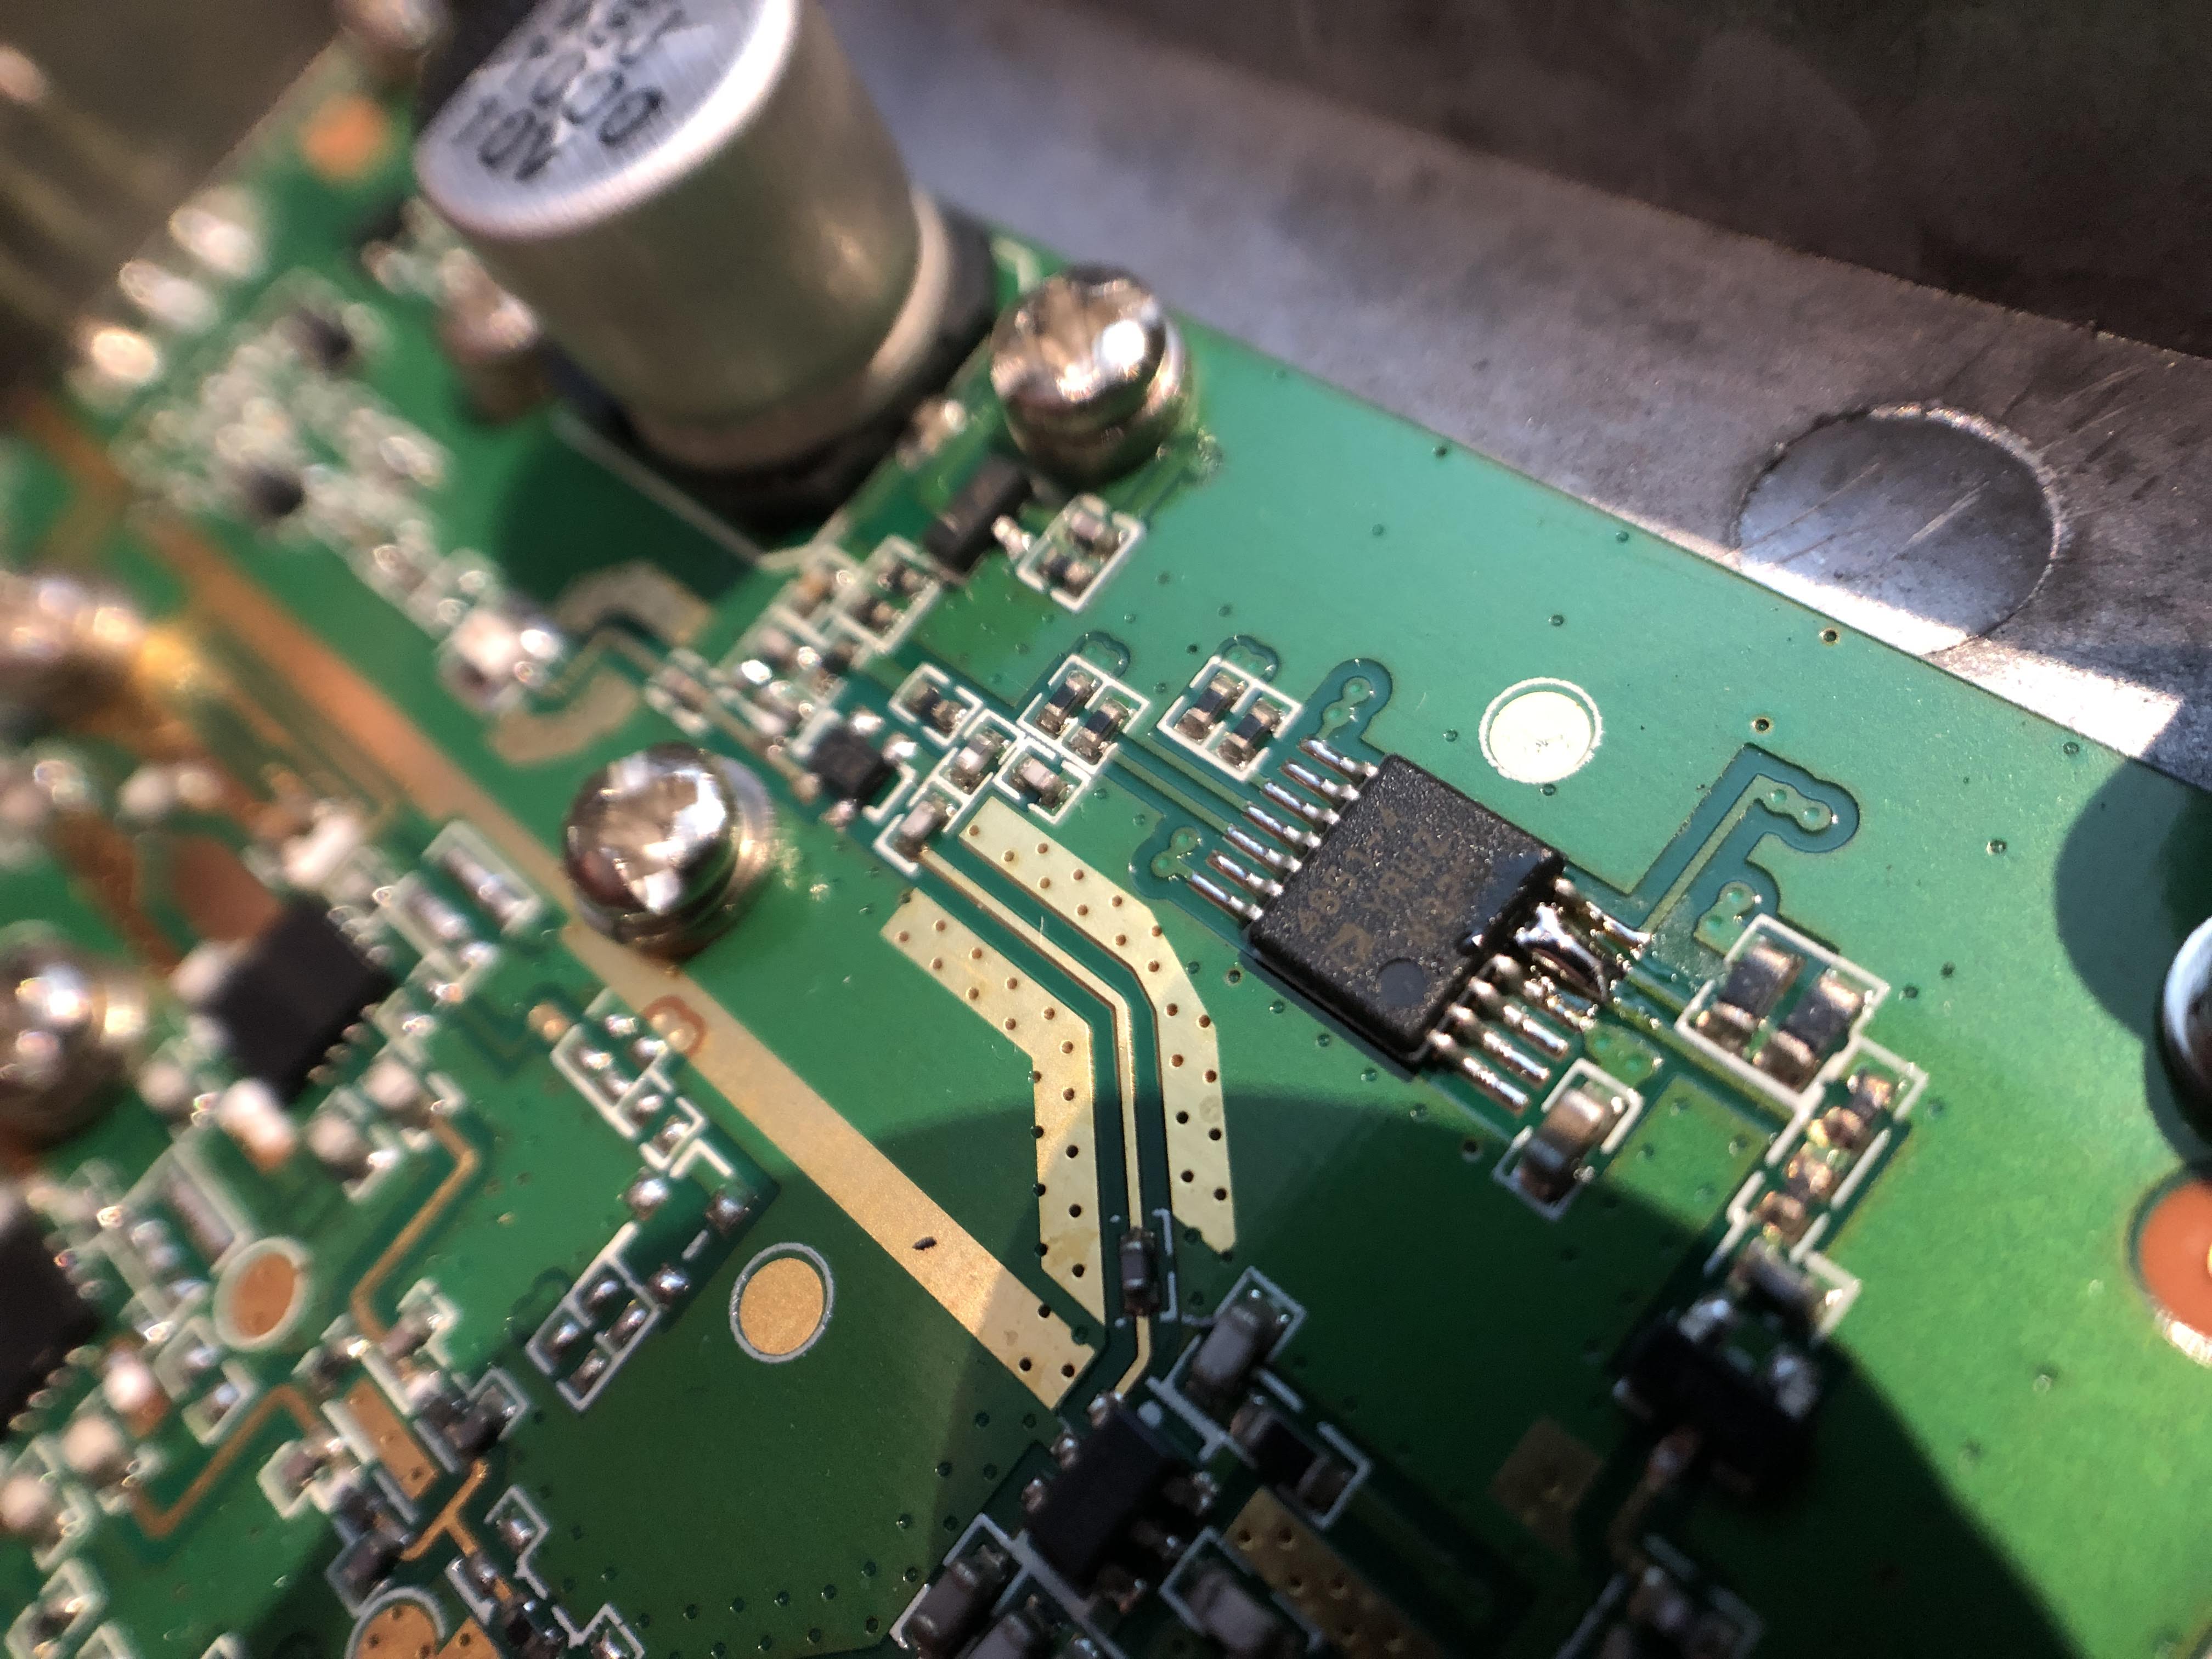 EP-AB003 PCB close-up on AD4851-4 opamp, bridged pins